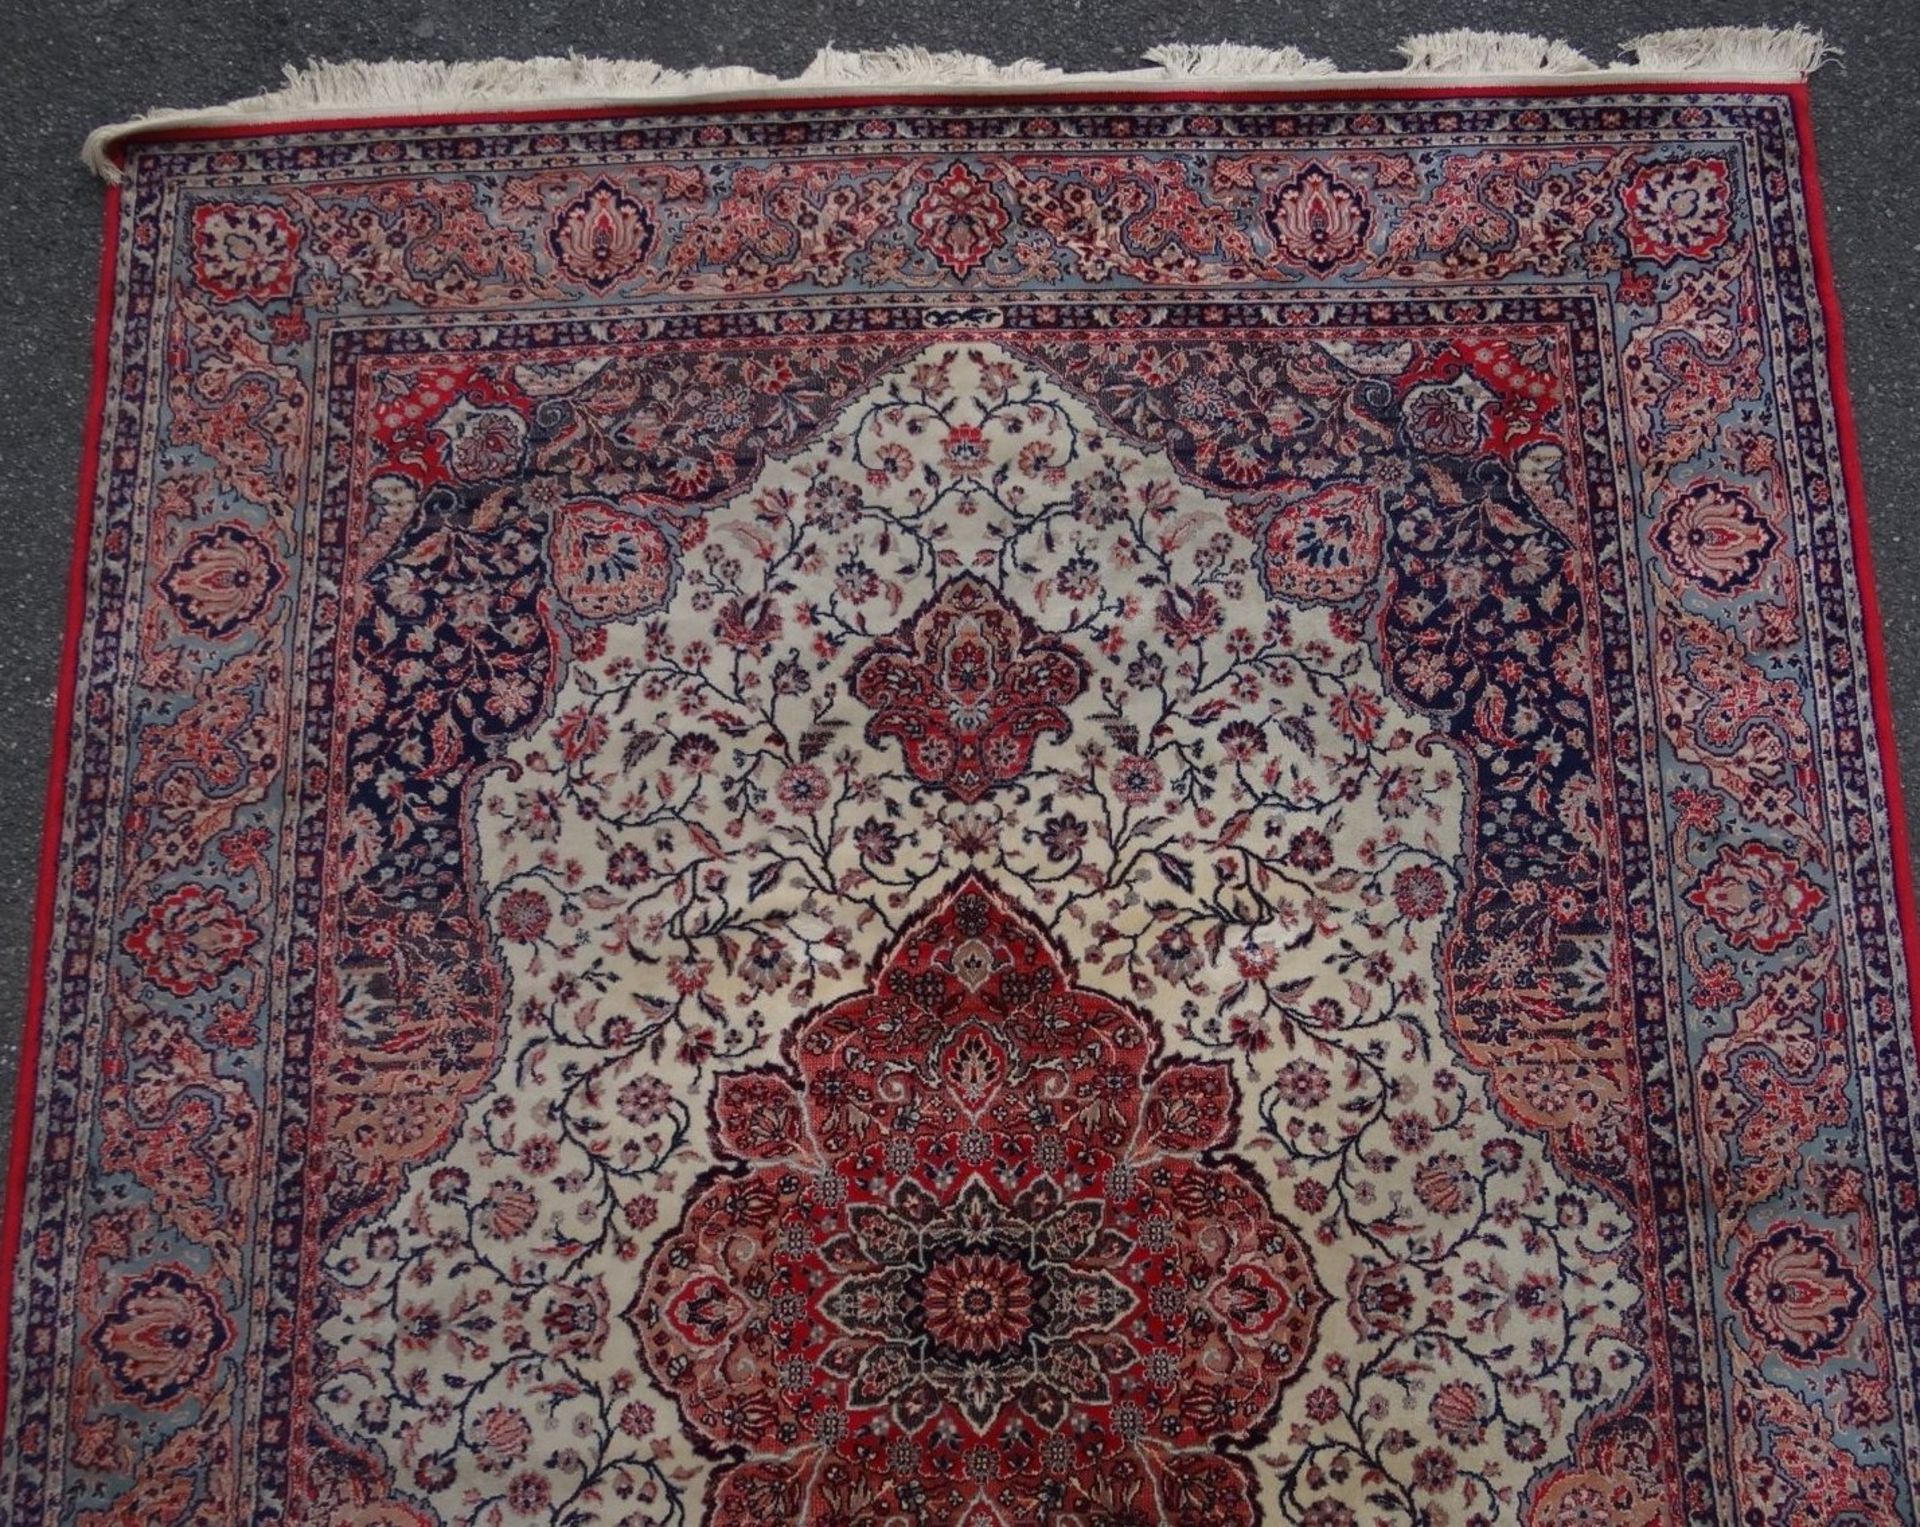 Seidenteppich "Persia" 260x210 cm - Image 5 of 6